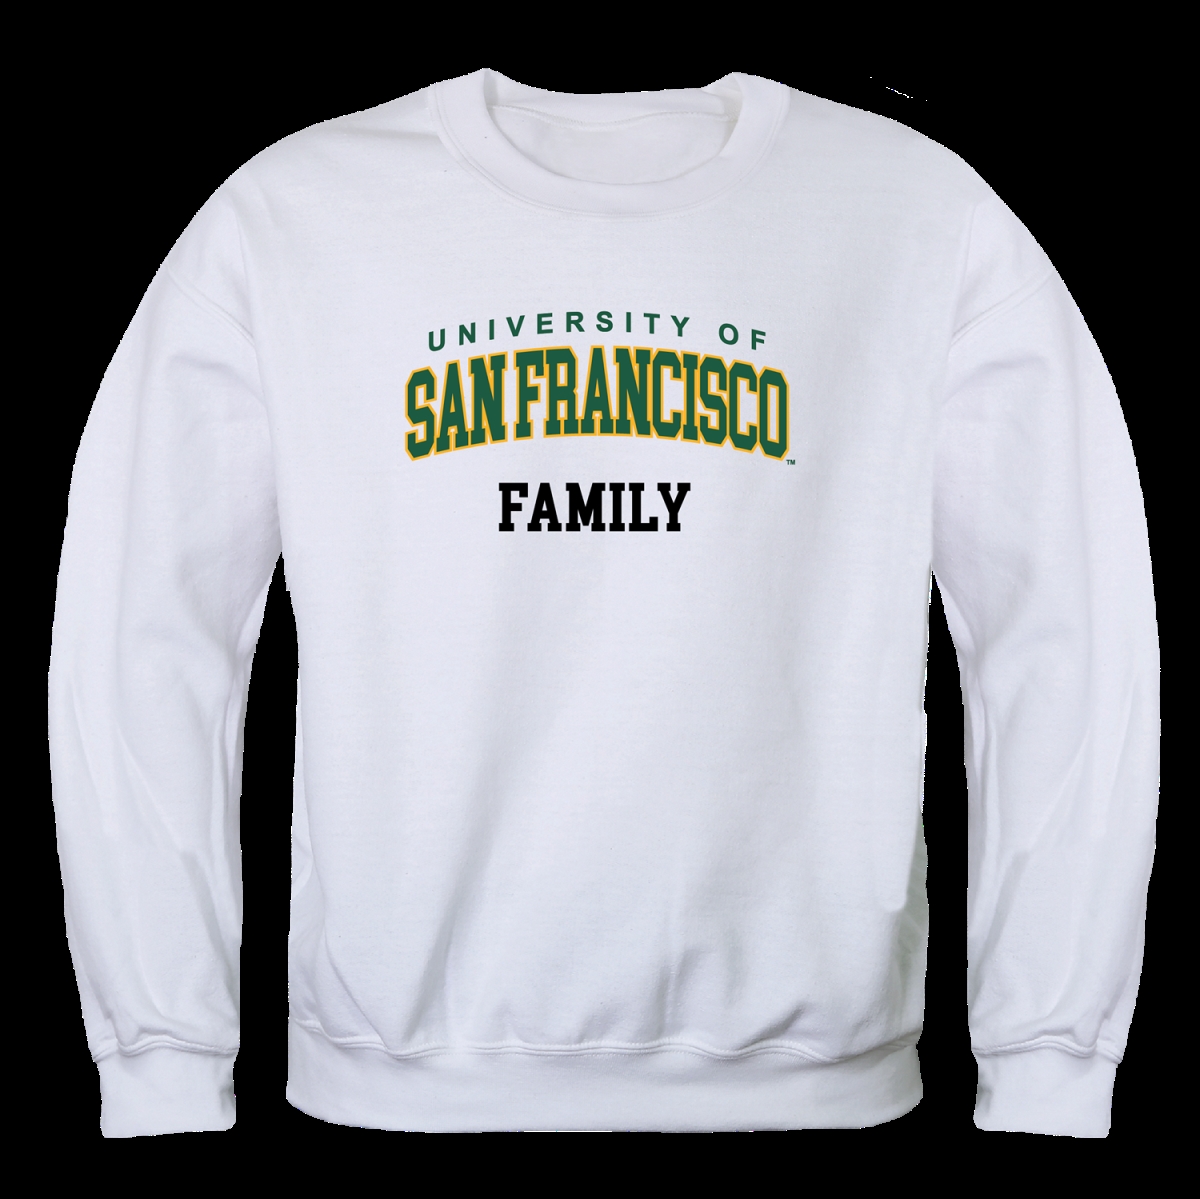 572-377-WHT-04 San Francisco State University Dons Family Crewneck Sweatshirt, White - Extra Large -  W Republic